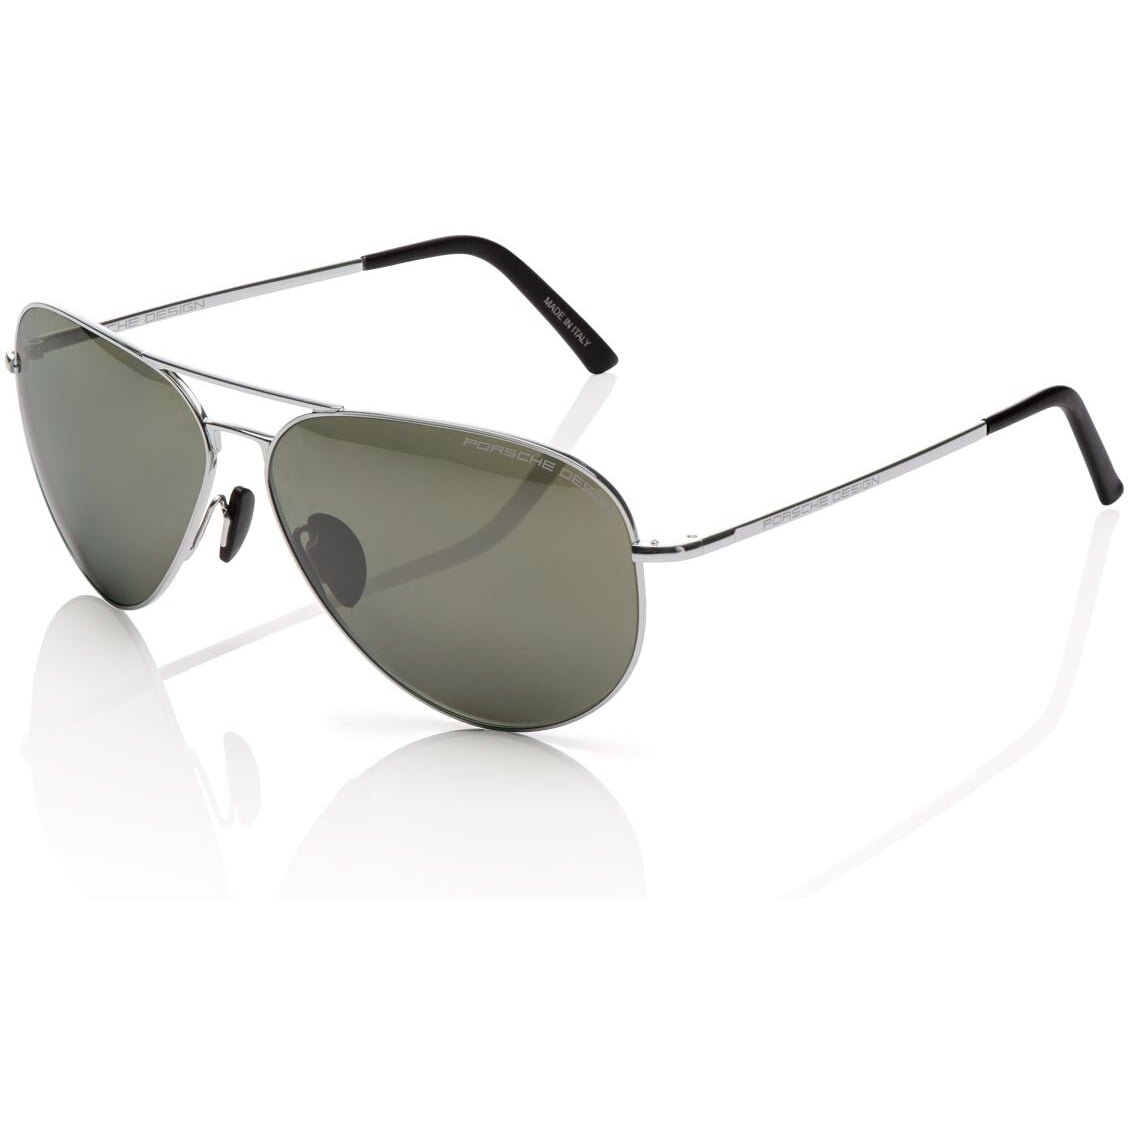 Porsche Design P'8508 Polarized Sunglasses - Walmart.com